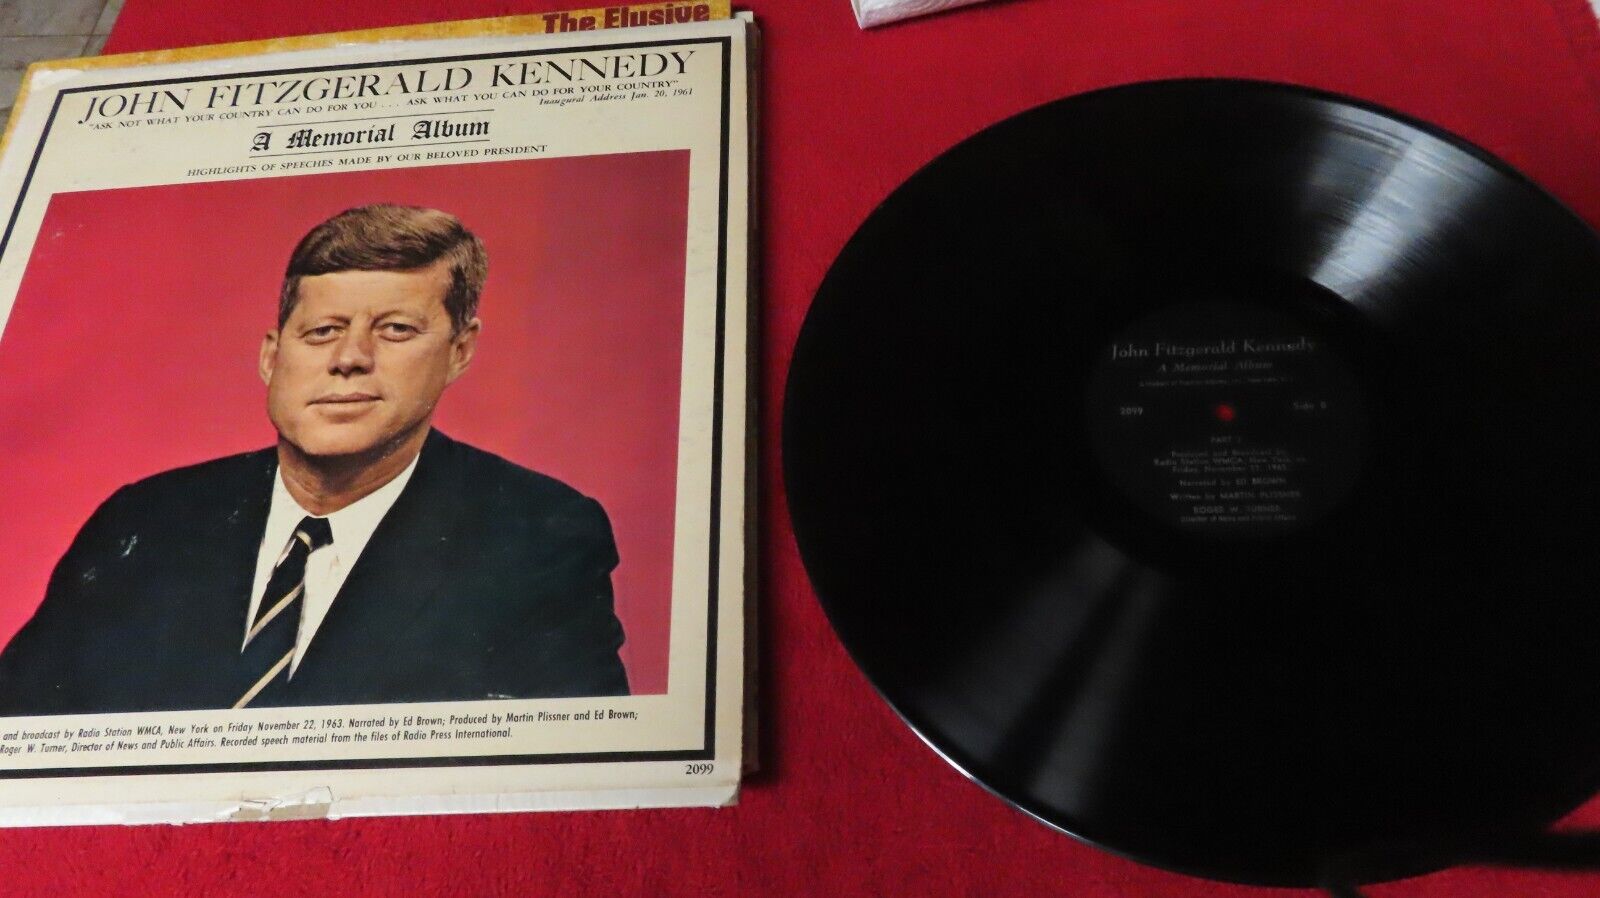 John F. Kennedy - A Memorial Album - Used Vinyl Record